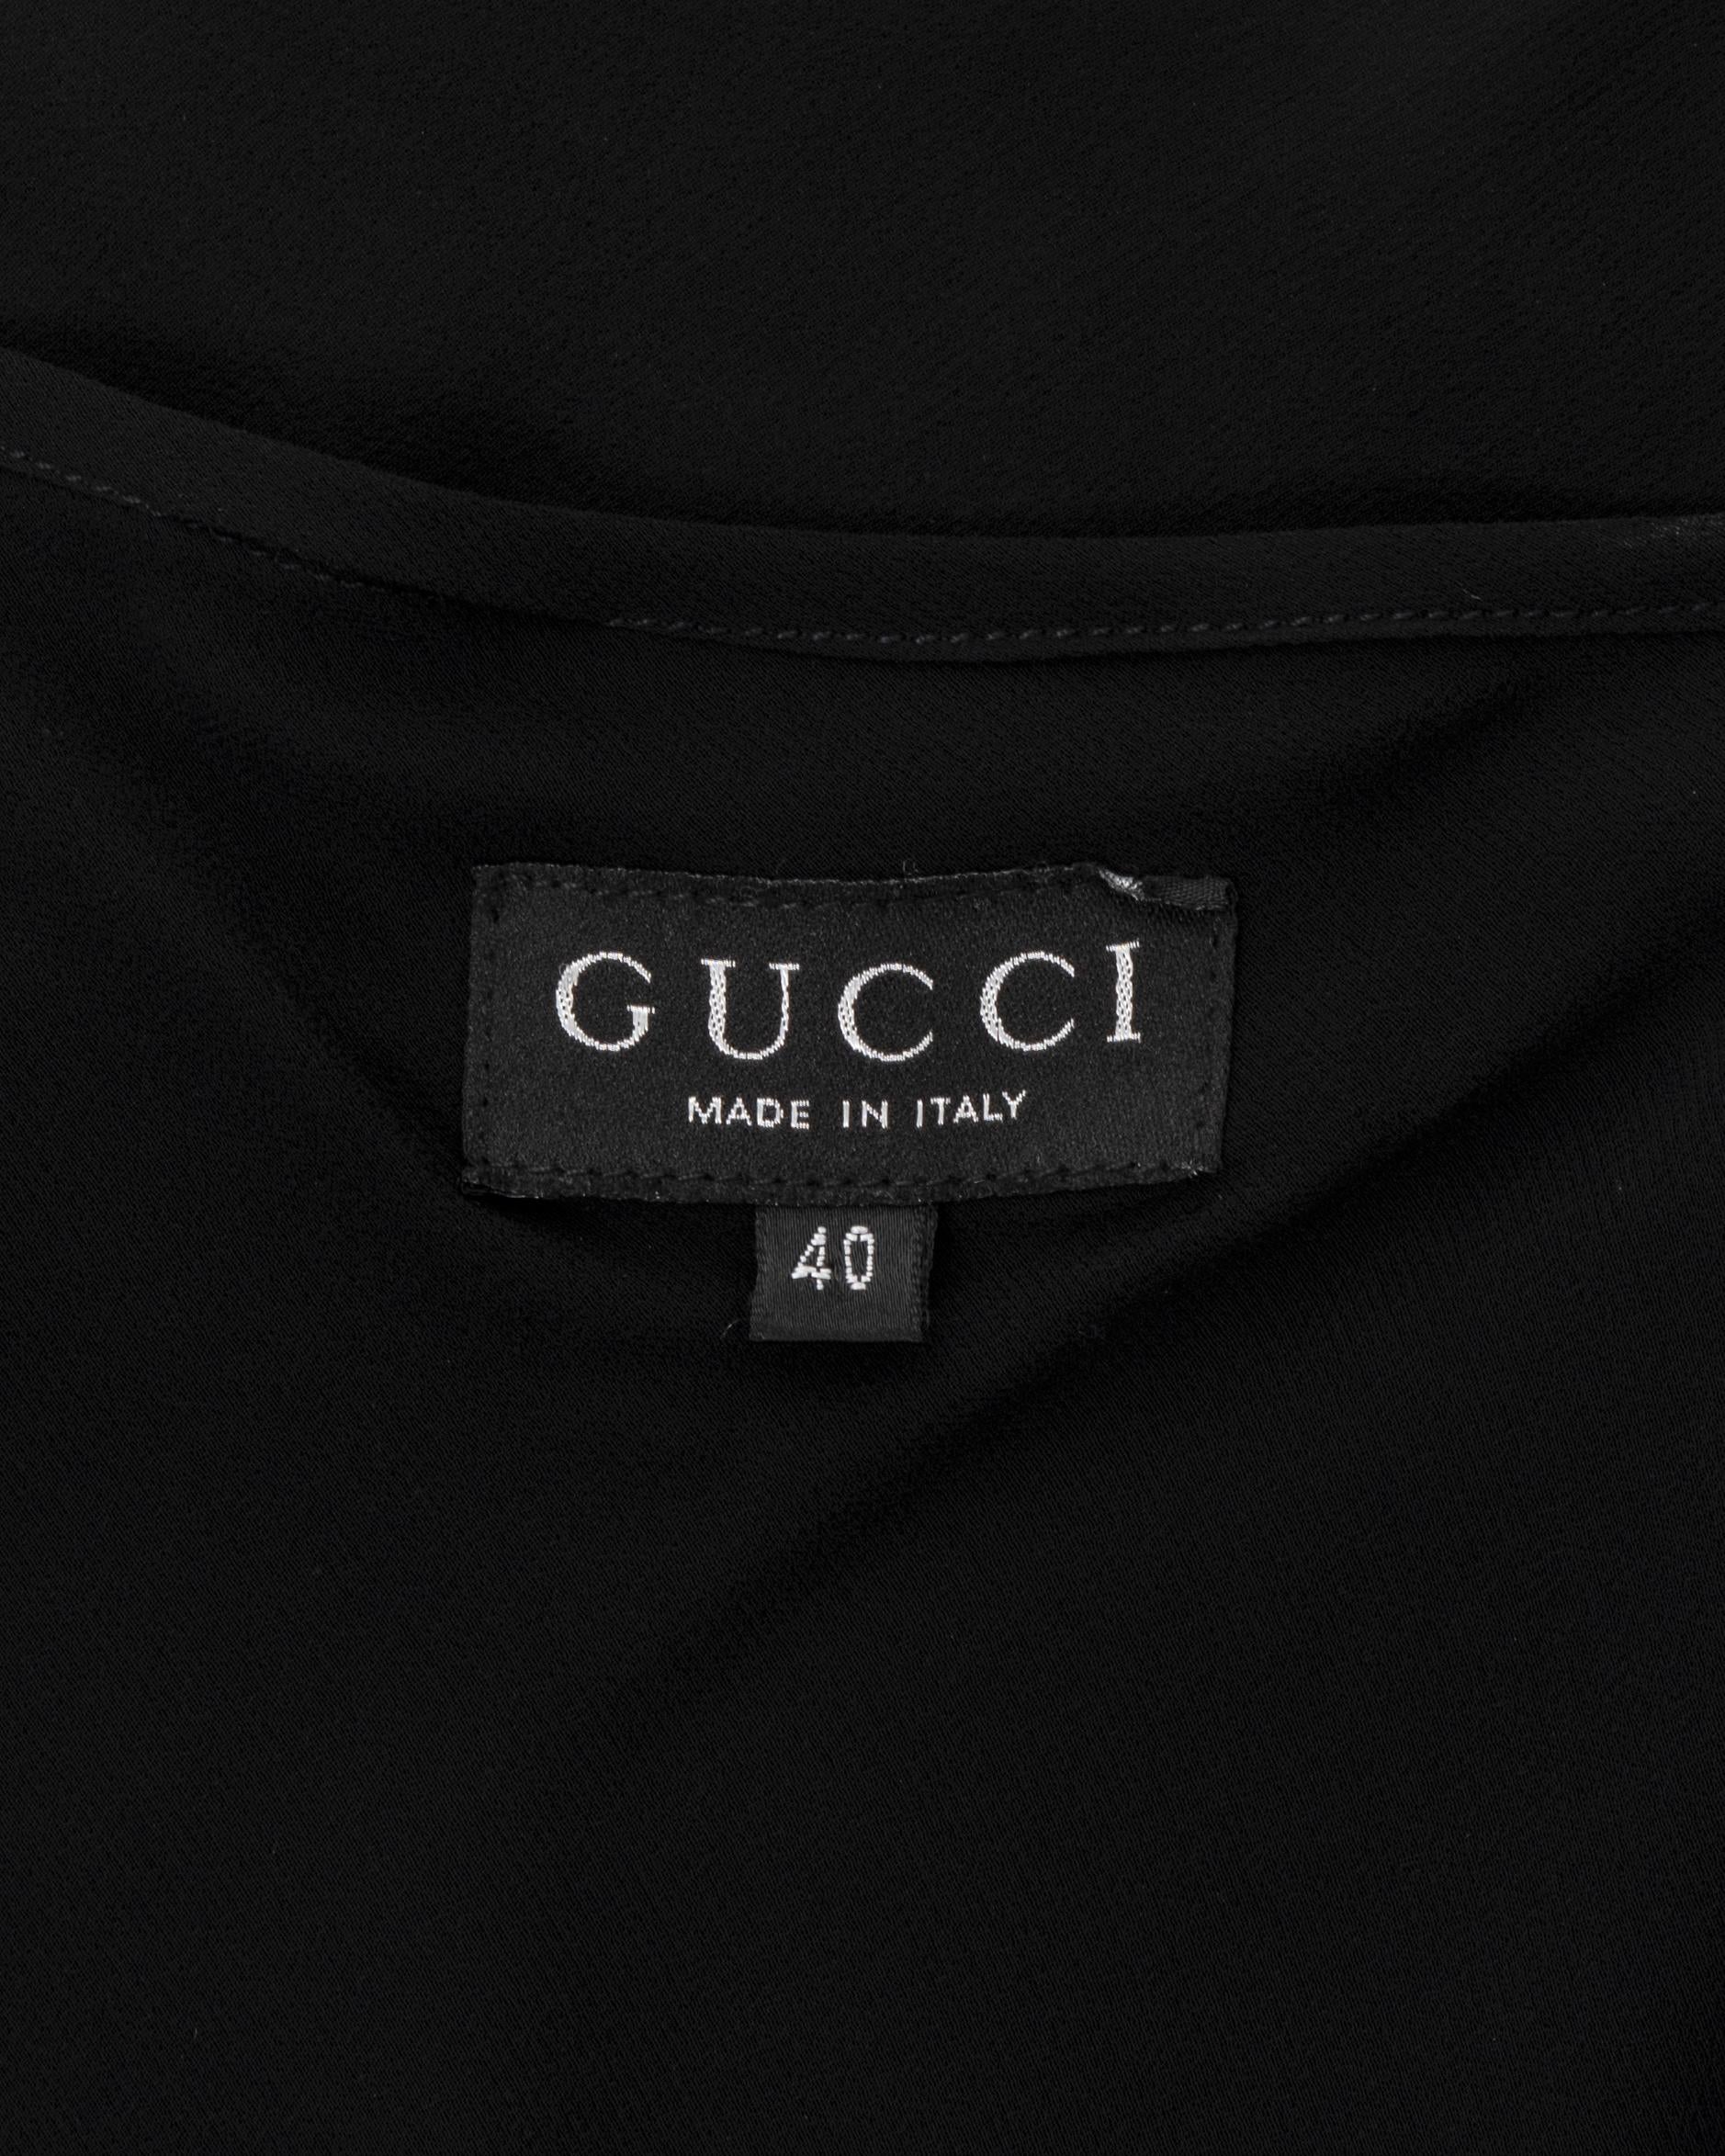 Gucci by Tom Ford black bias cut silk crepe chiffon evening slip dress, ss 1997 For Sale 3